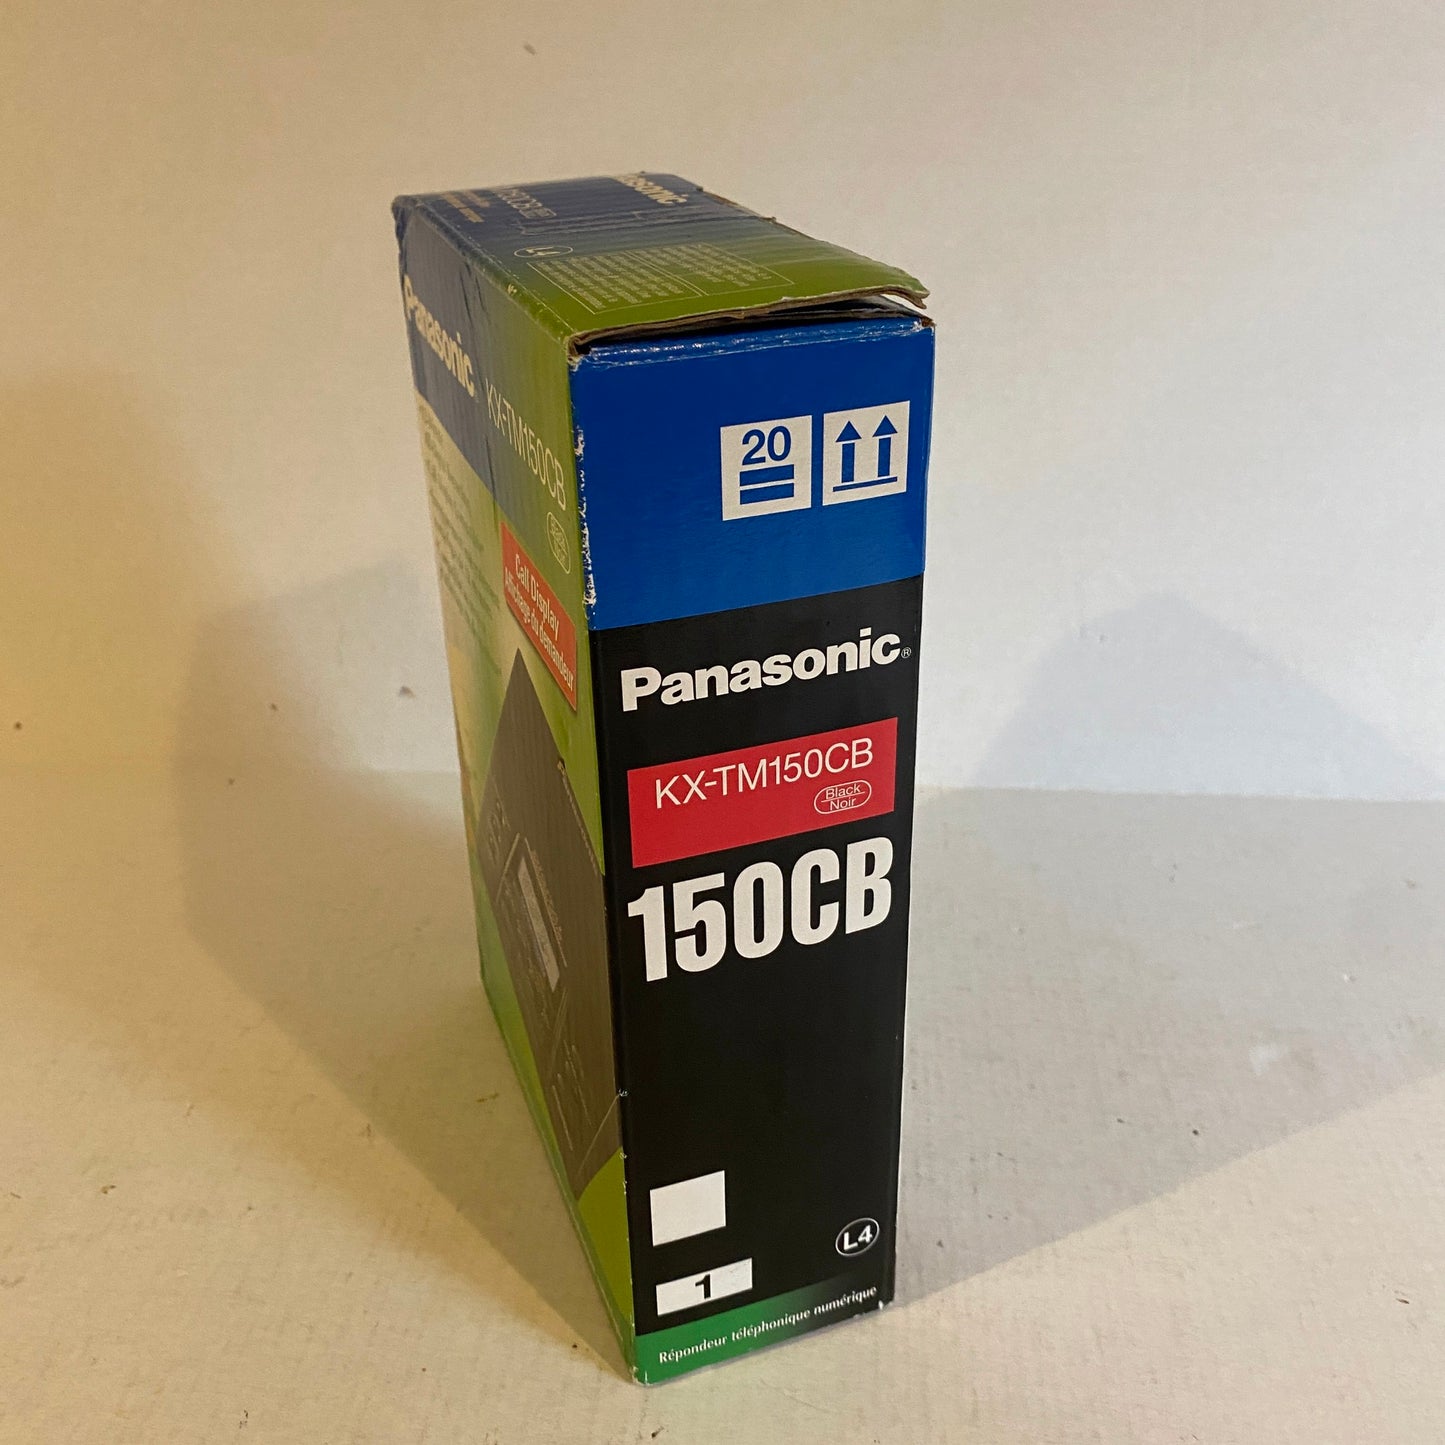 Panasonic Digital Answering Machine System - KX-TM150CB